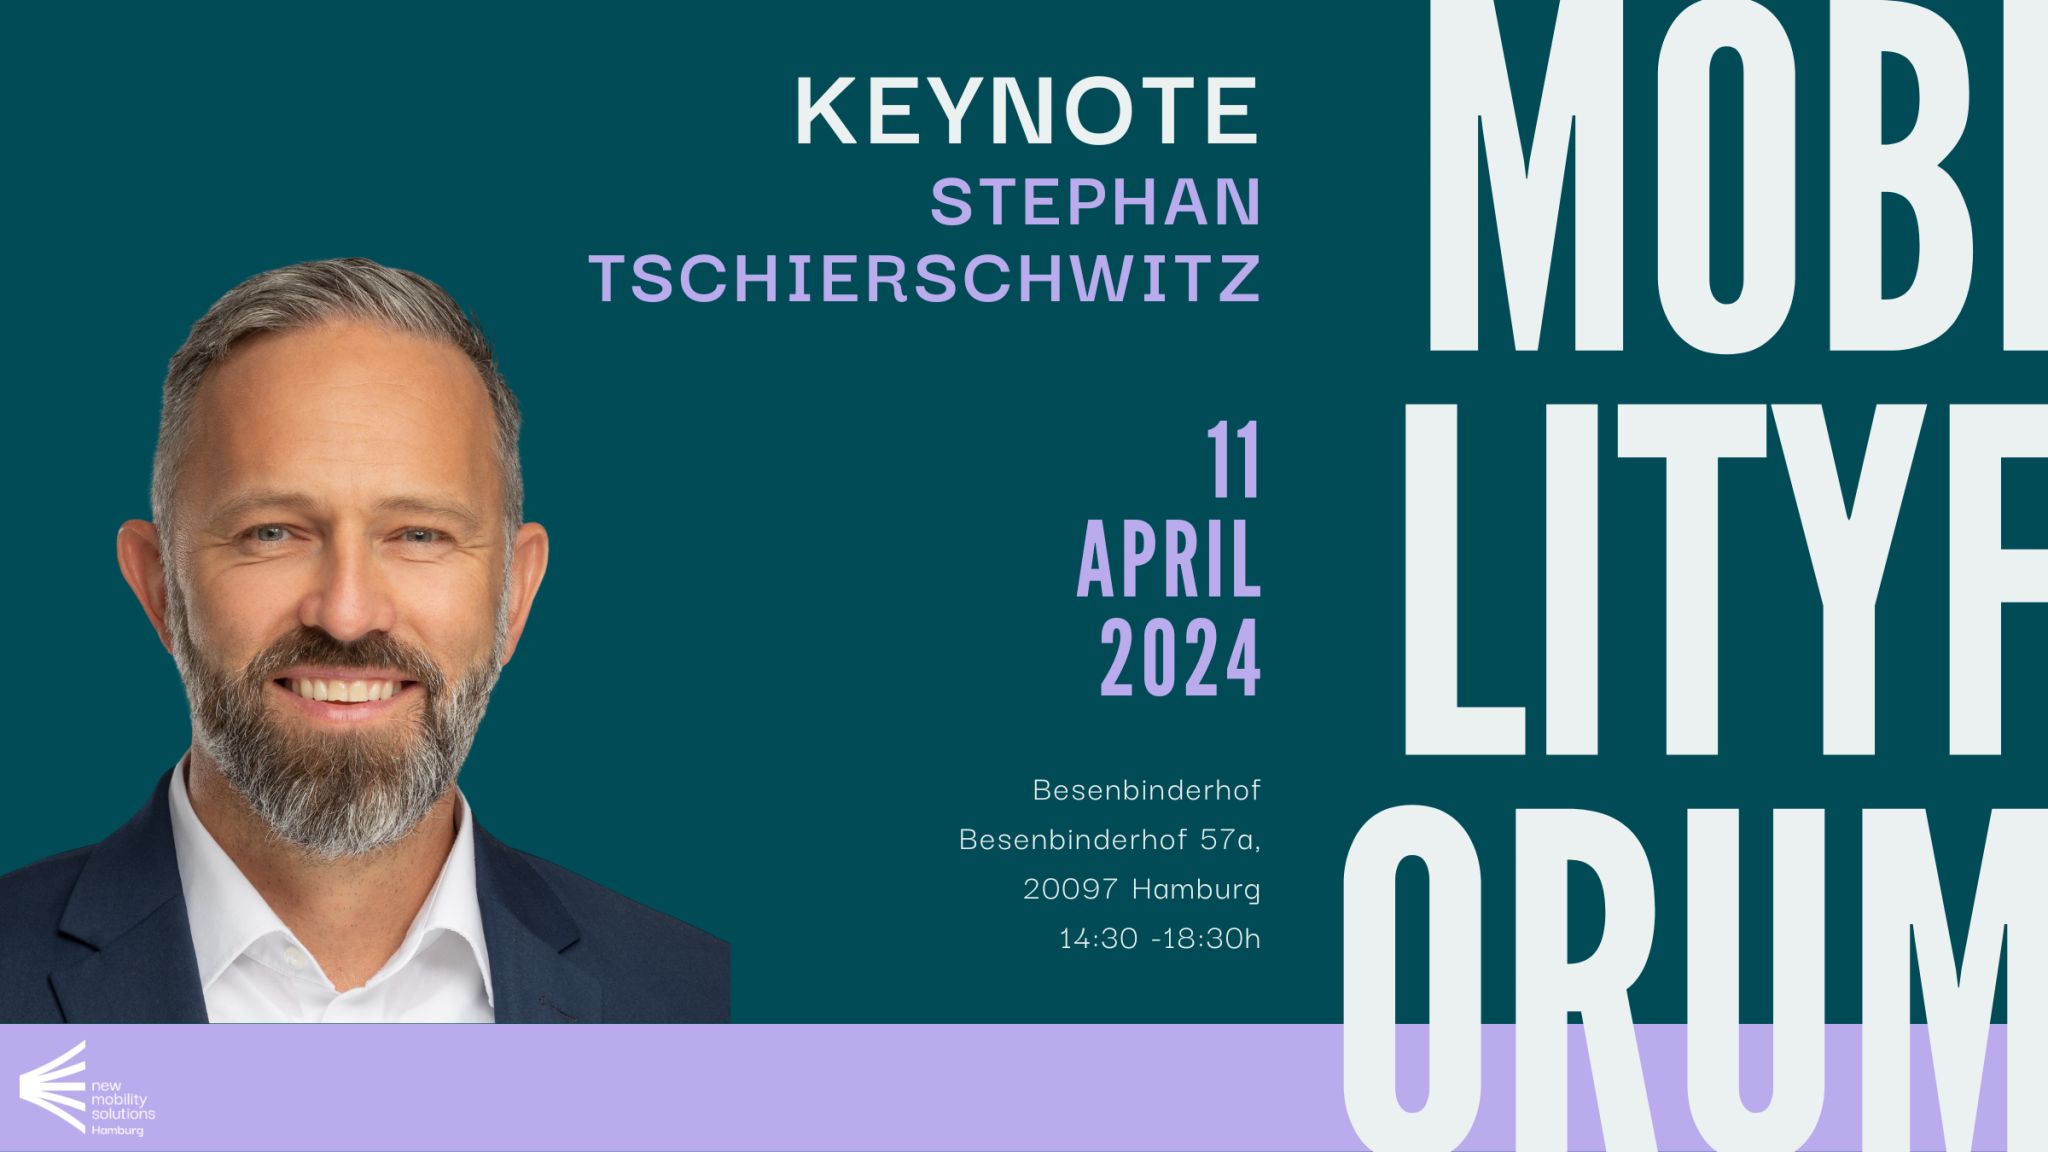 Keynote Stephan Tschierschwitz 2. HMF